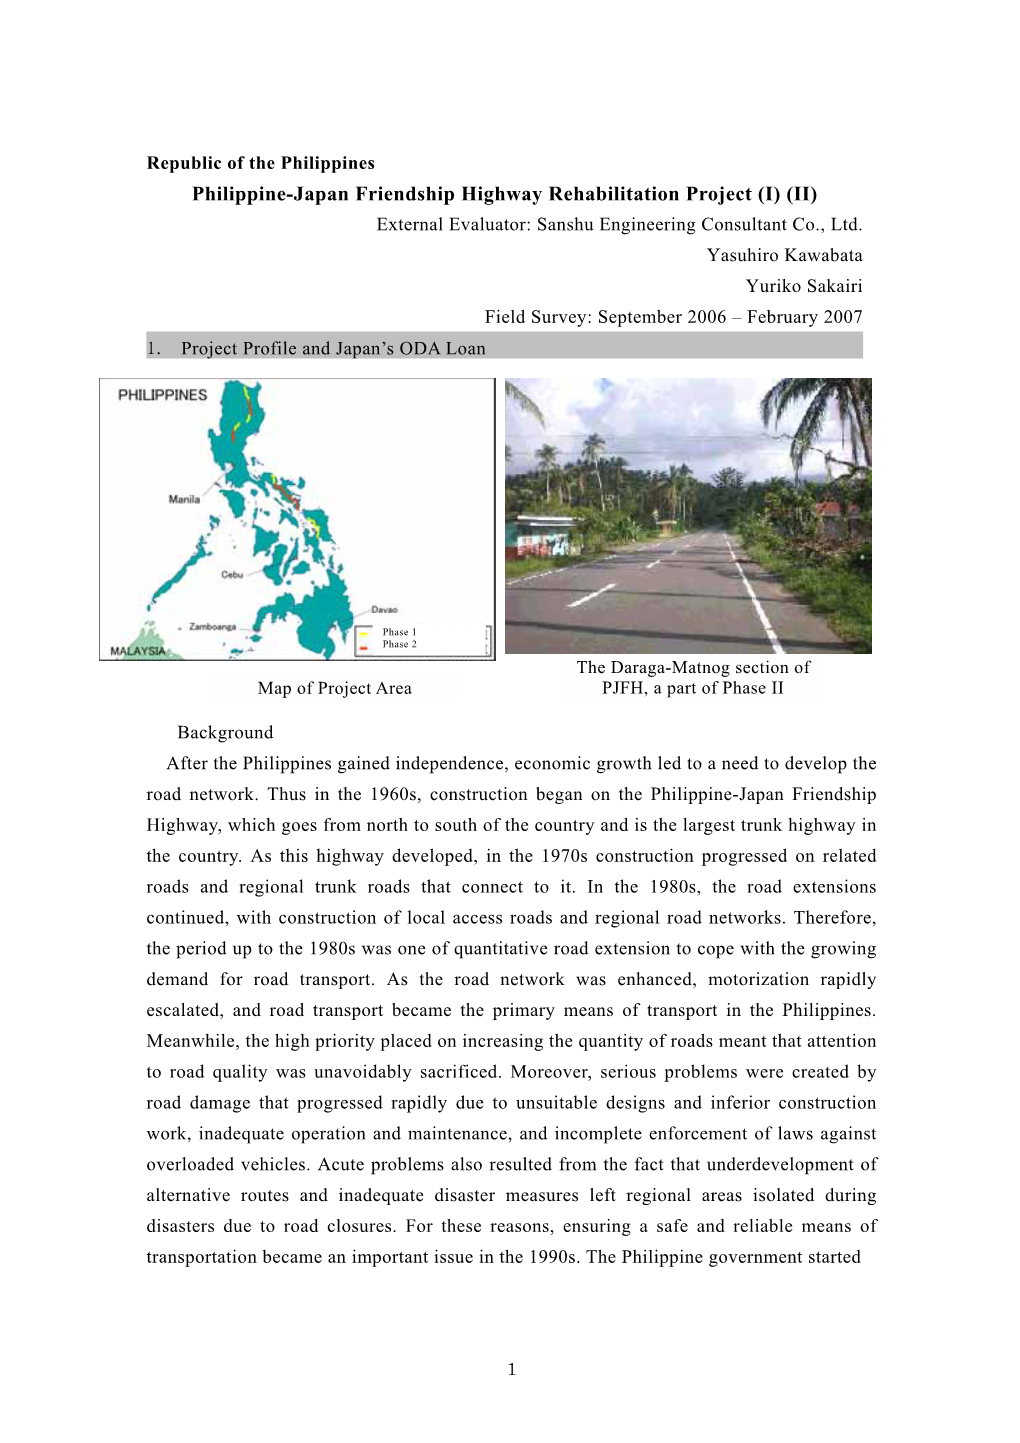 Philippine-Japan Friendship Highway Rehabilitation Project (I) (II) External Evaluator: Sanshu Engineering Consultant Co., Ltd